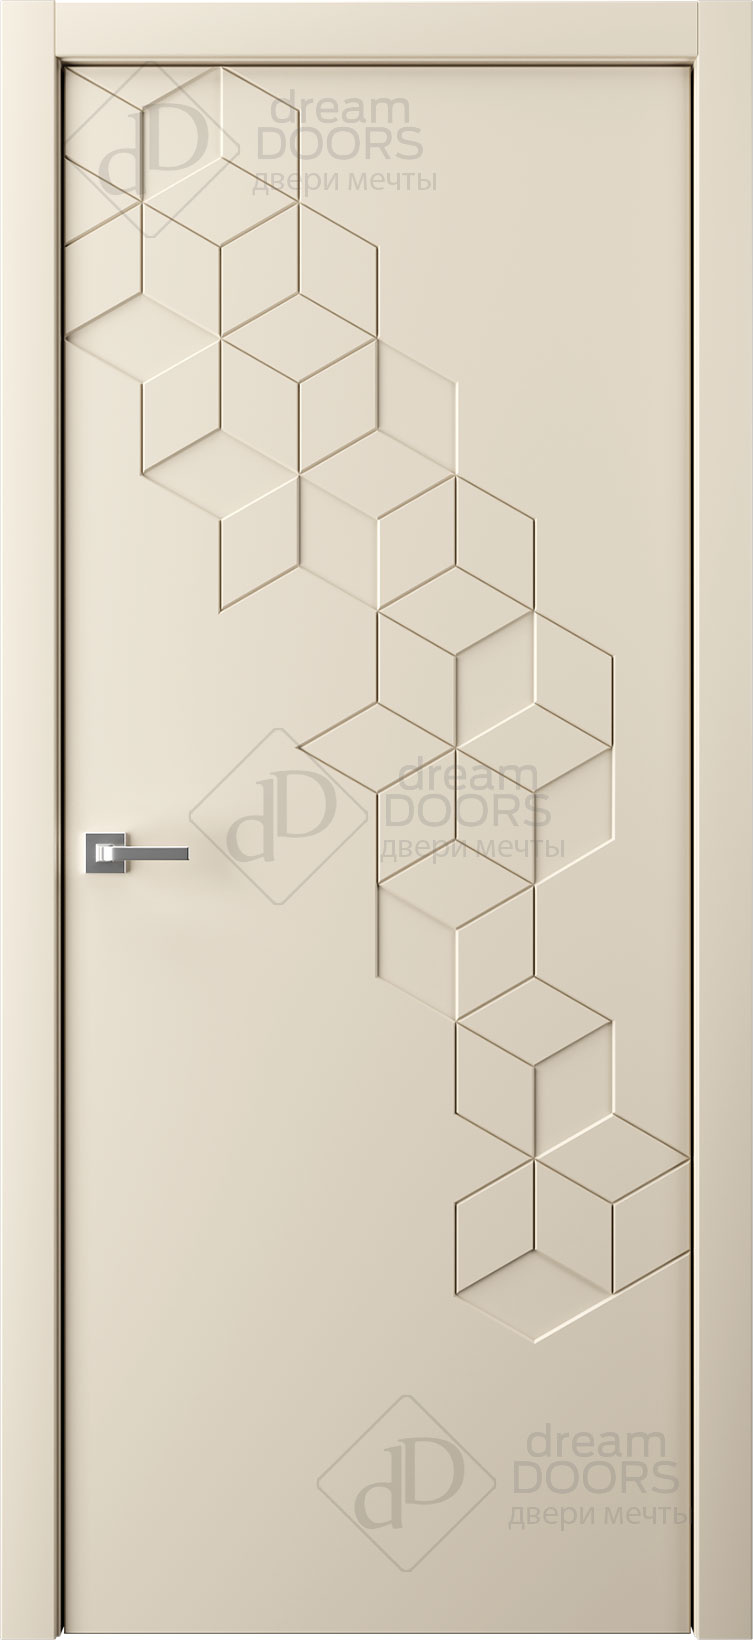 Dream Doors Межкомнатная дверь I24, арт. 6248 - фото №1